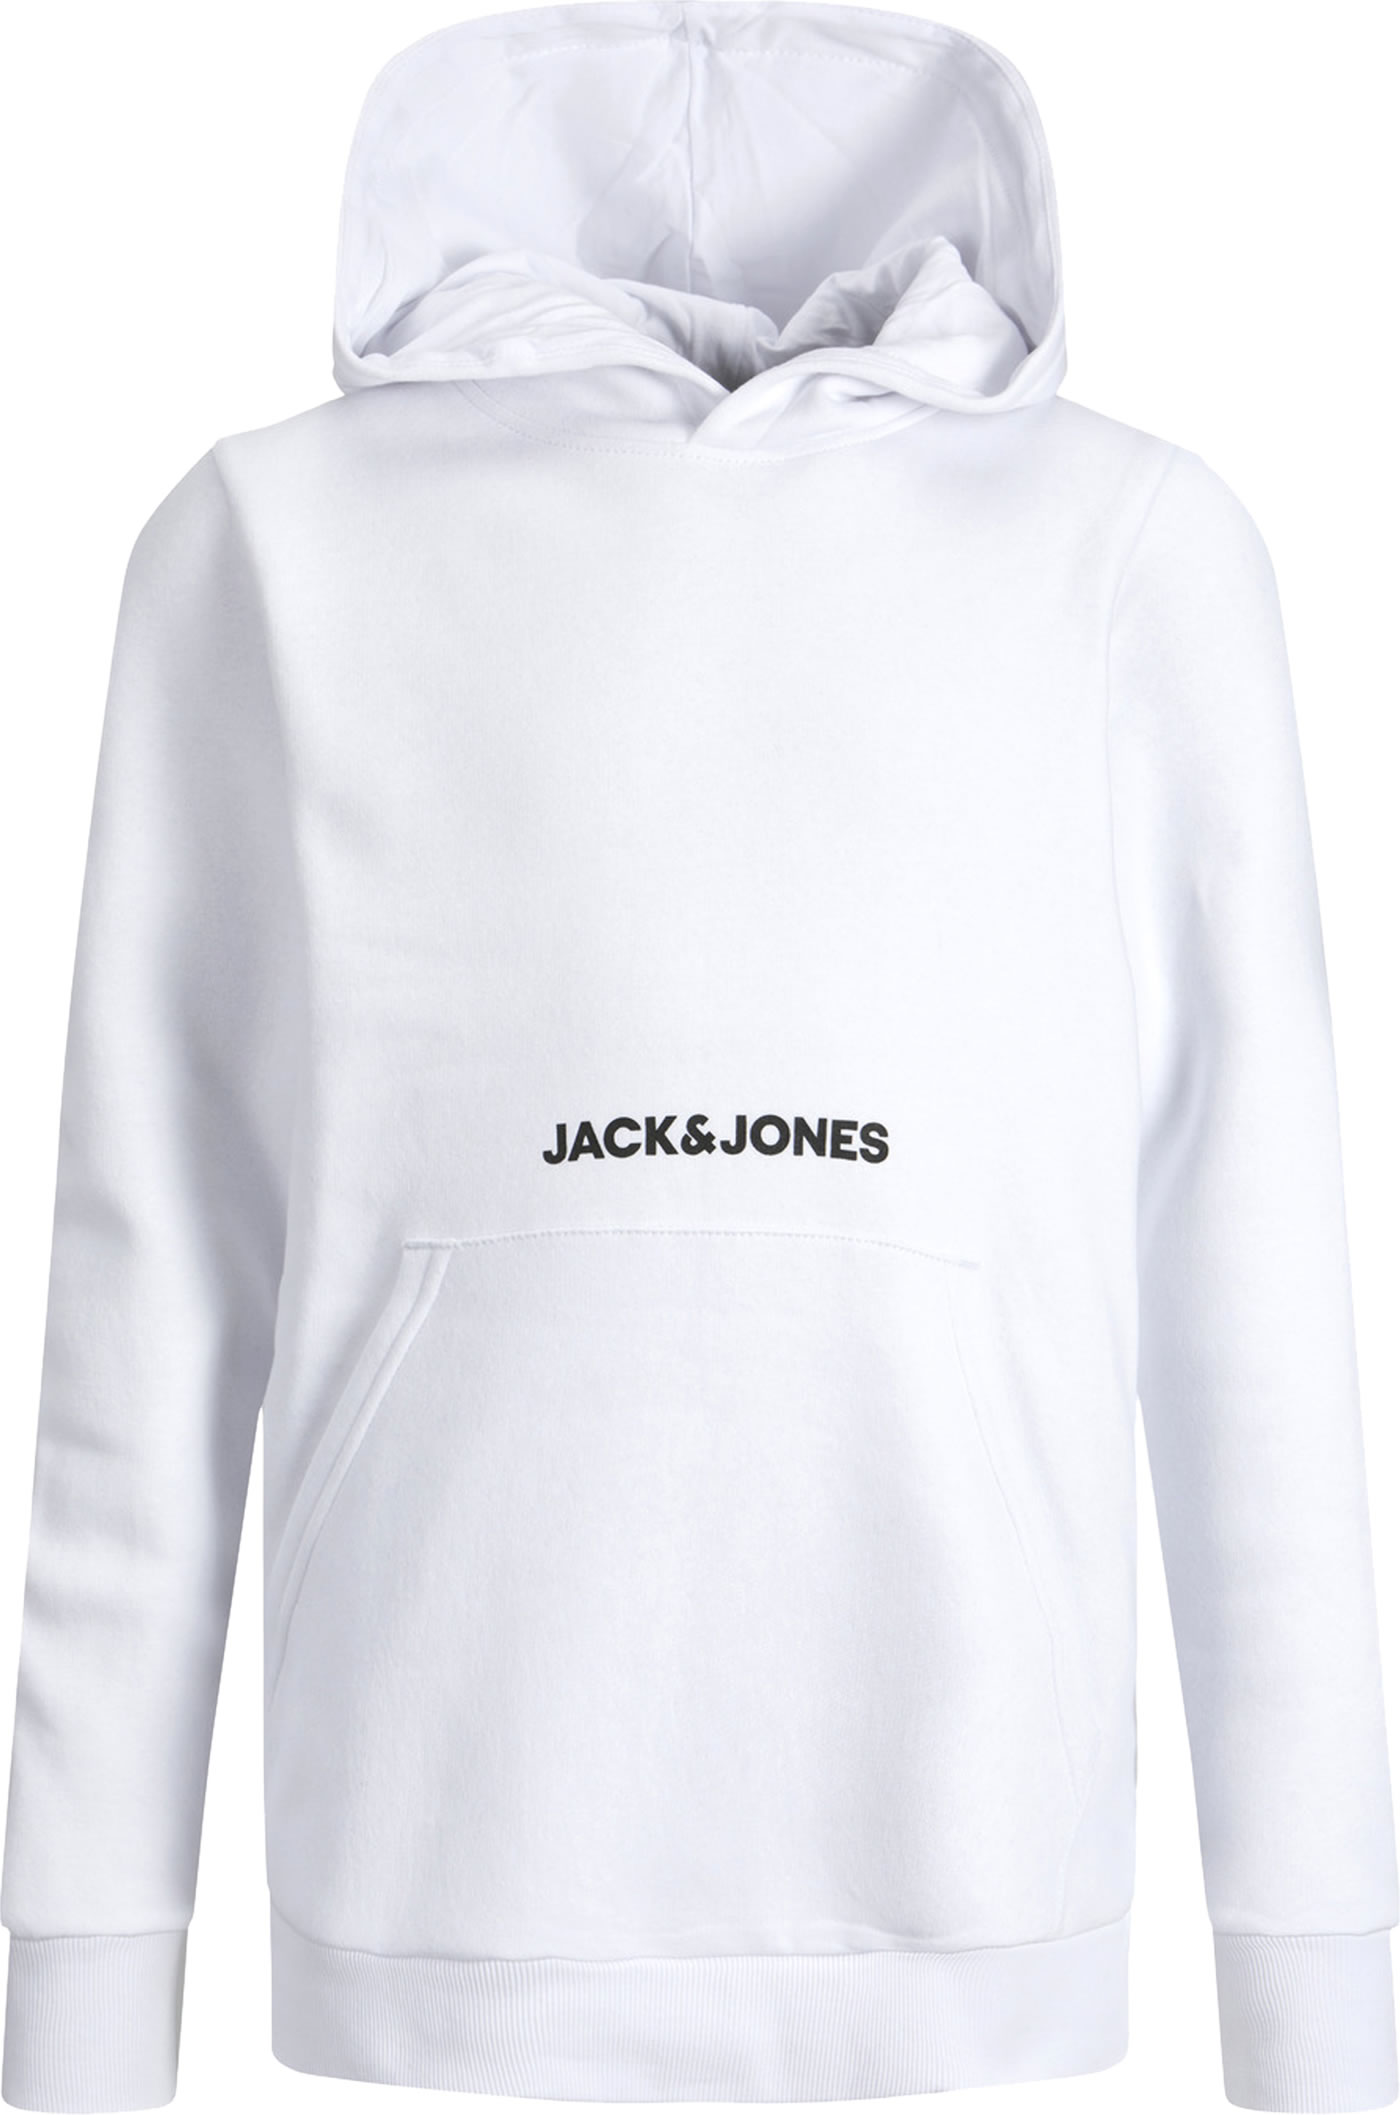 Rabatt 58 % Jack & Jones Pullover Weiß 152 KINDER Pullovers & Sweatshirts Stricken 